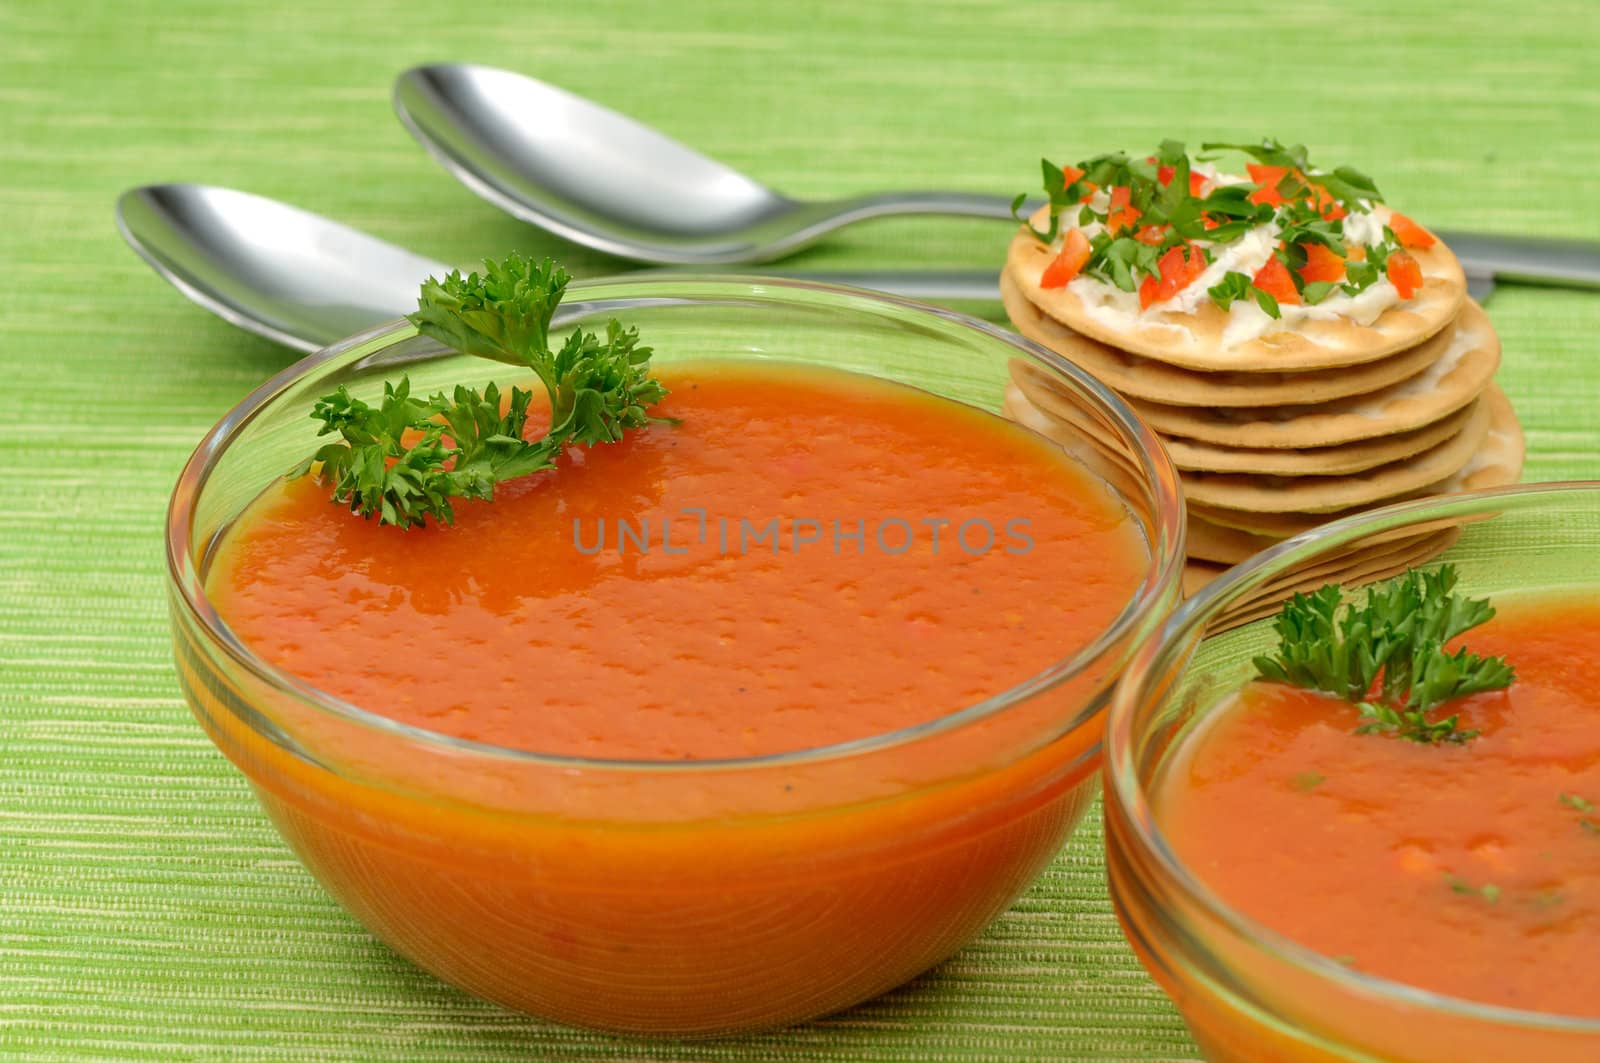 Tomato soup by Hbak